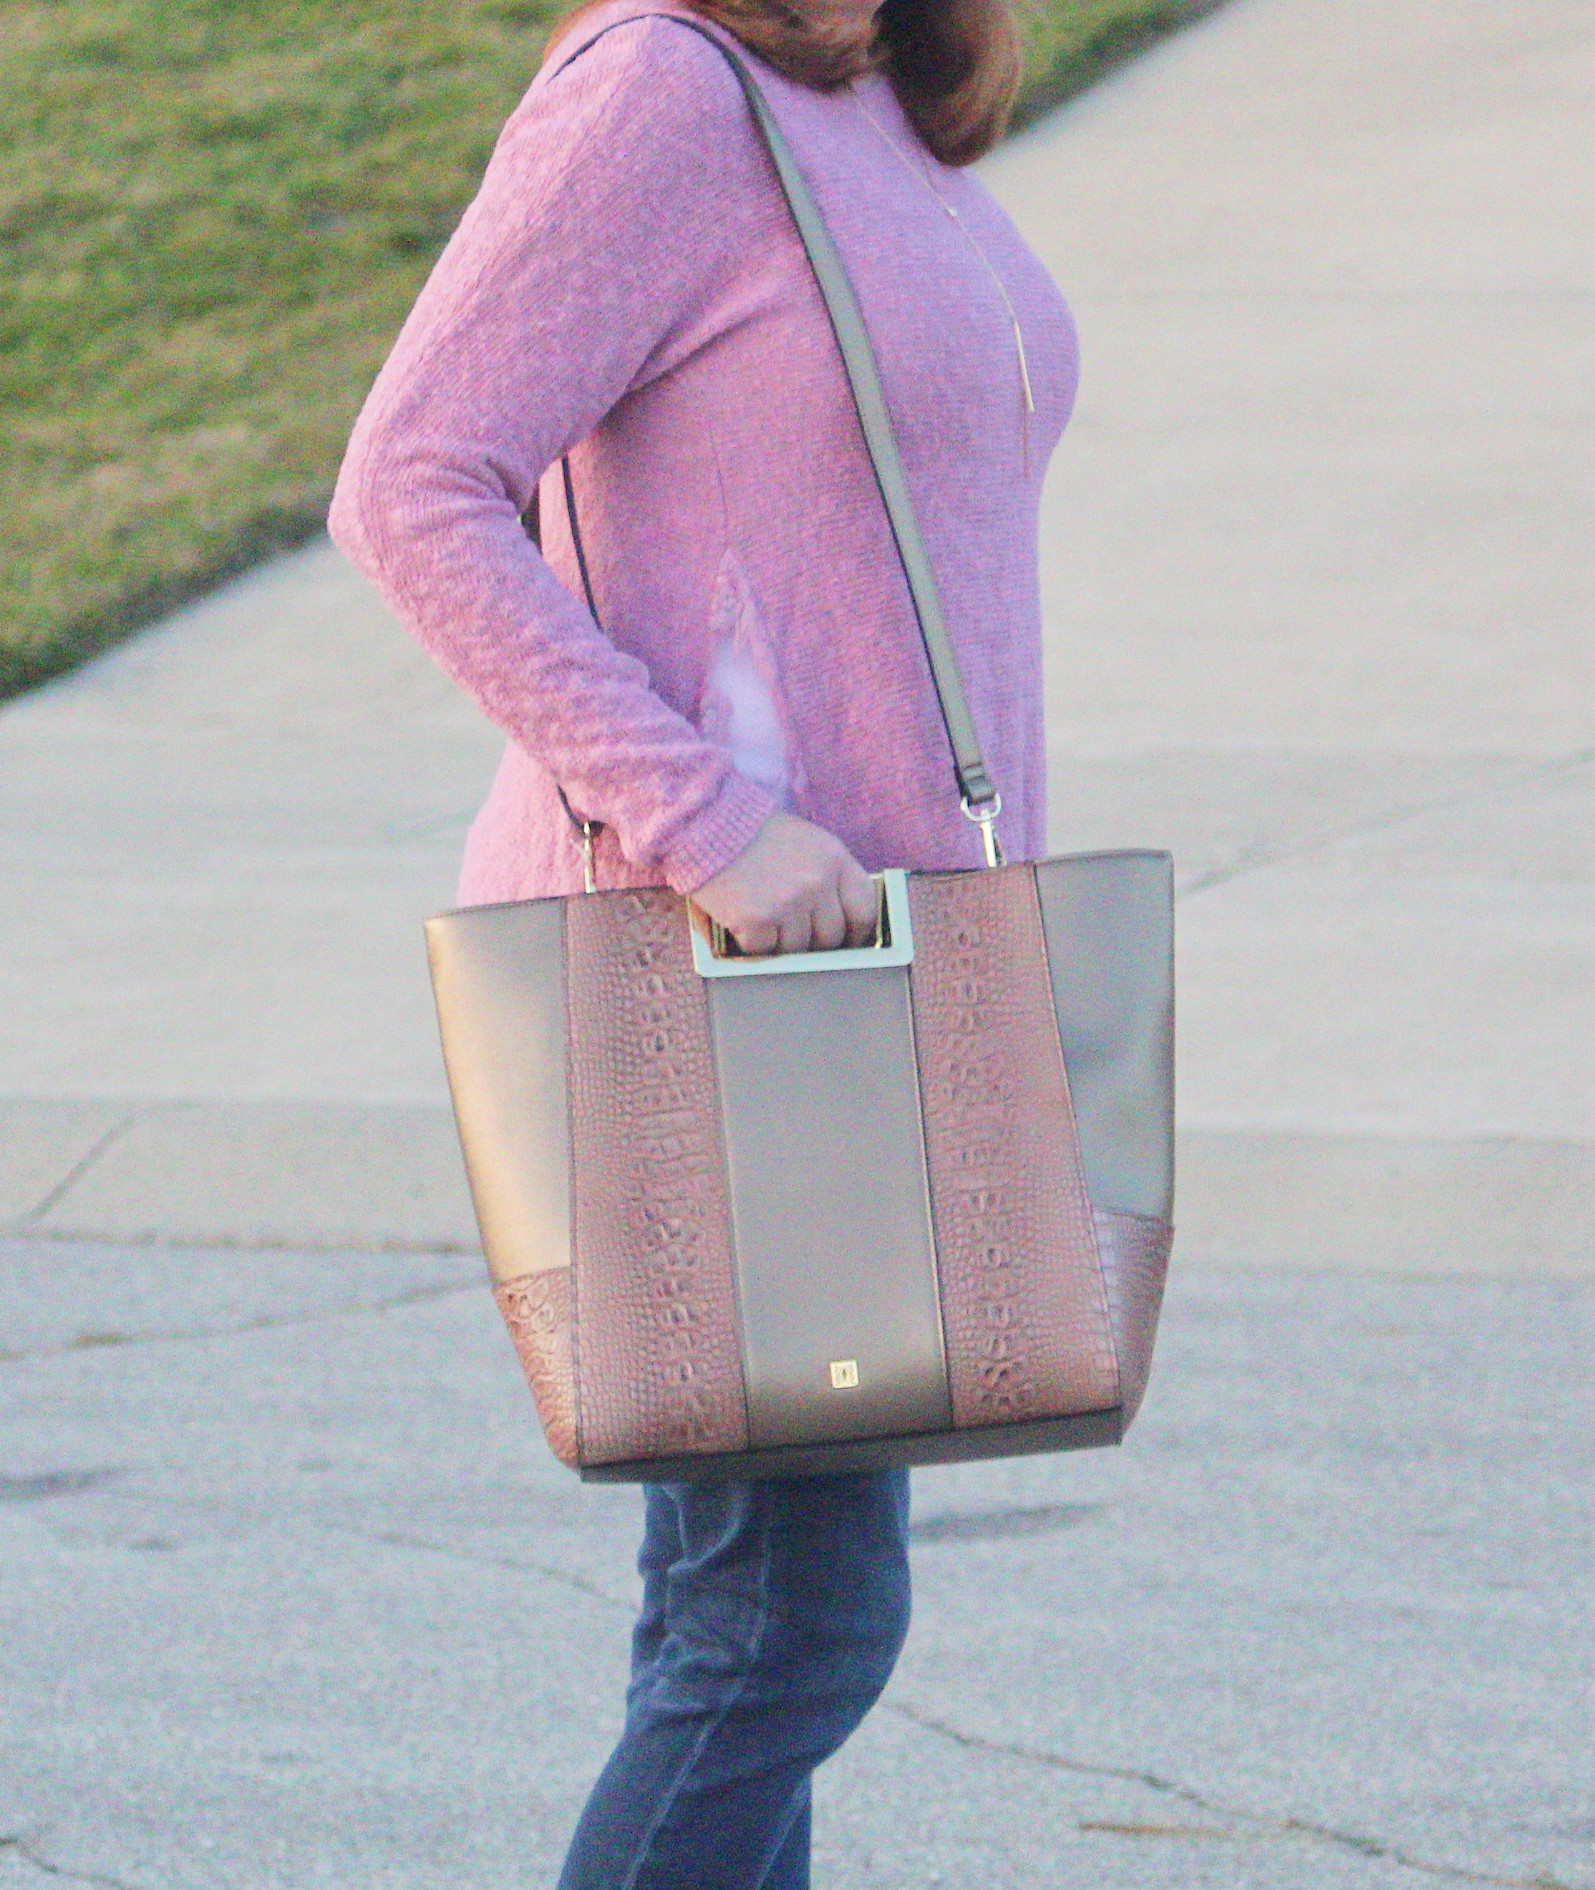 Kate Landry Handbag And Pink Sweater